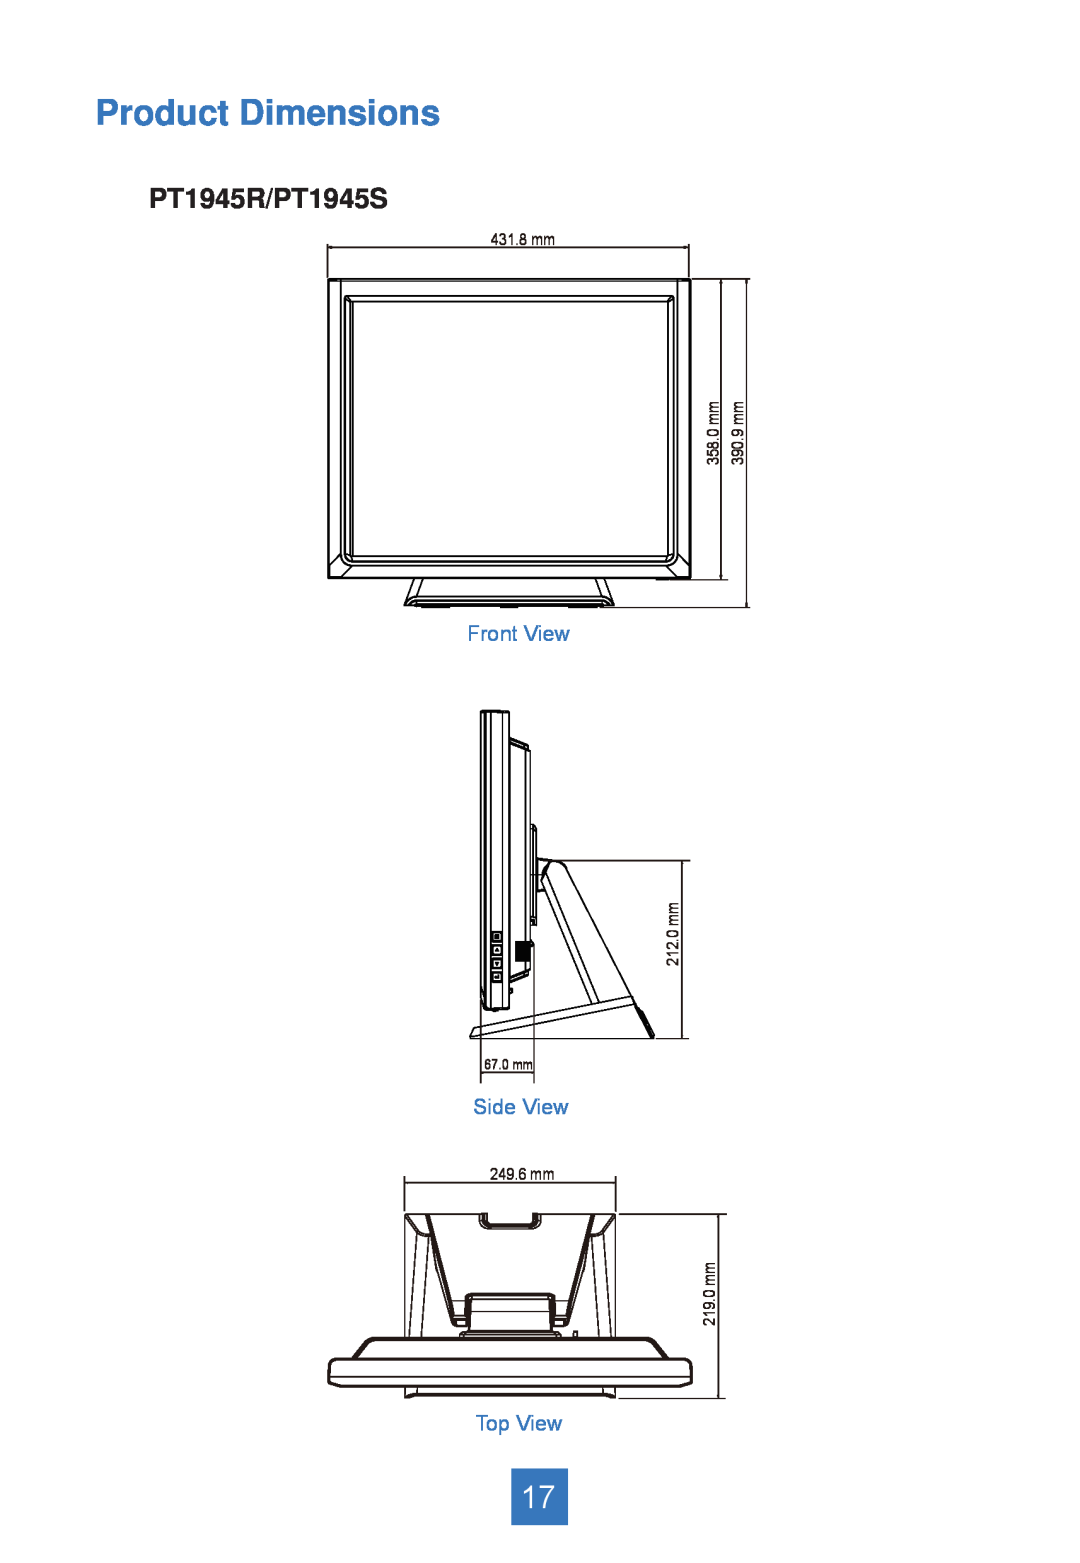 Planar PT1945RW Product Dimensions, PT1945R/PT1945S, 431.8 mm, 249.6 mm, 358.0 mm, 390.9 mm, mm212.0 67.0 mm, 219.0 mm 